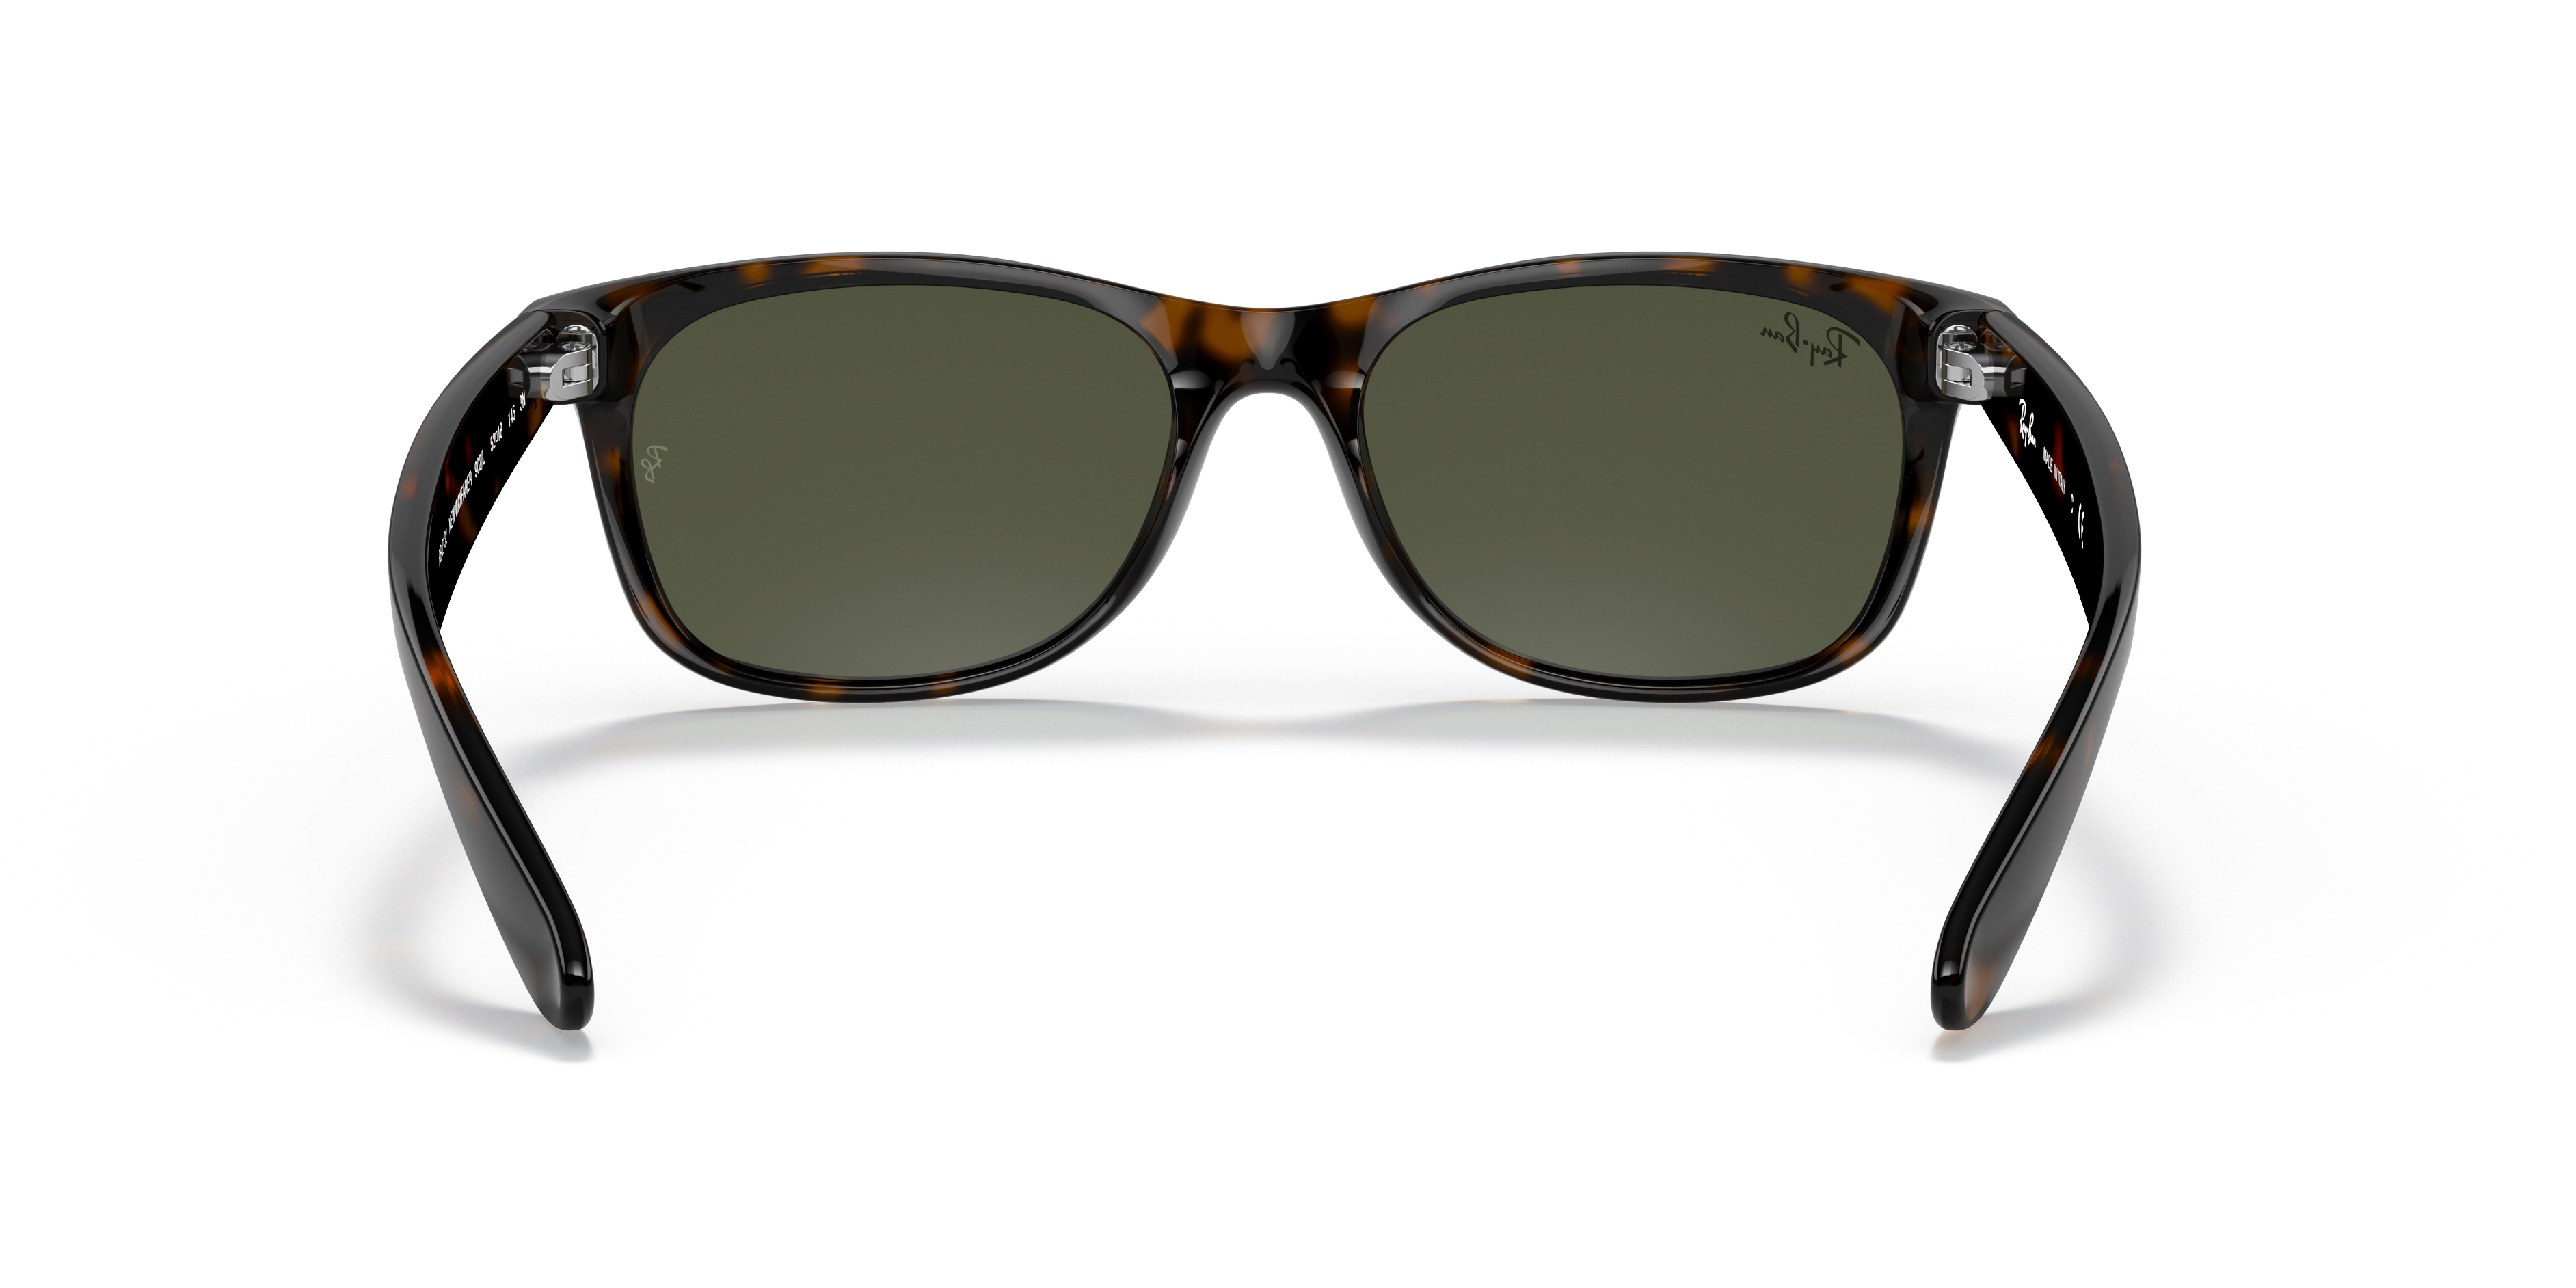 Detail02 Ray-Ban New Wayfarer RB 2132 (902L) Sunglasses Green / Tortoise Shell